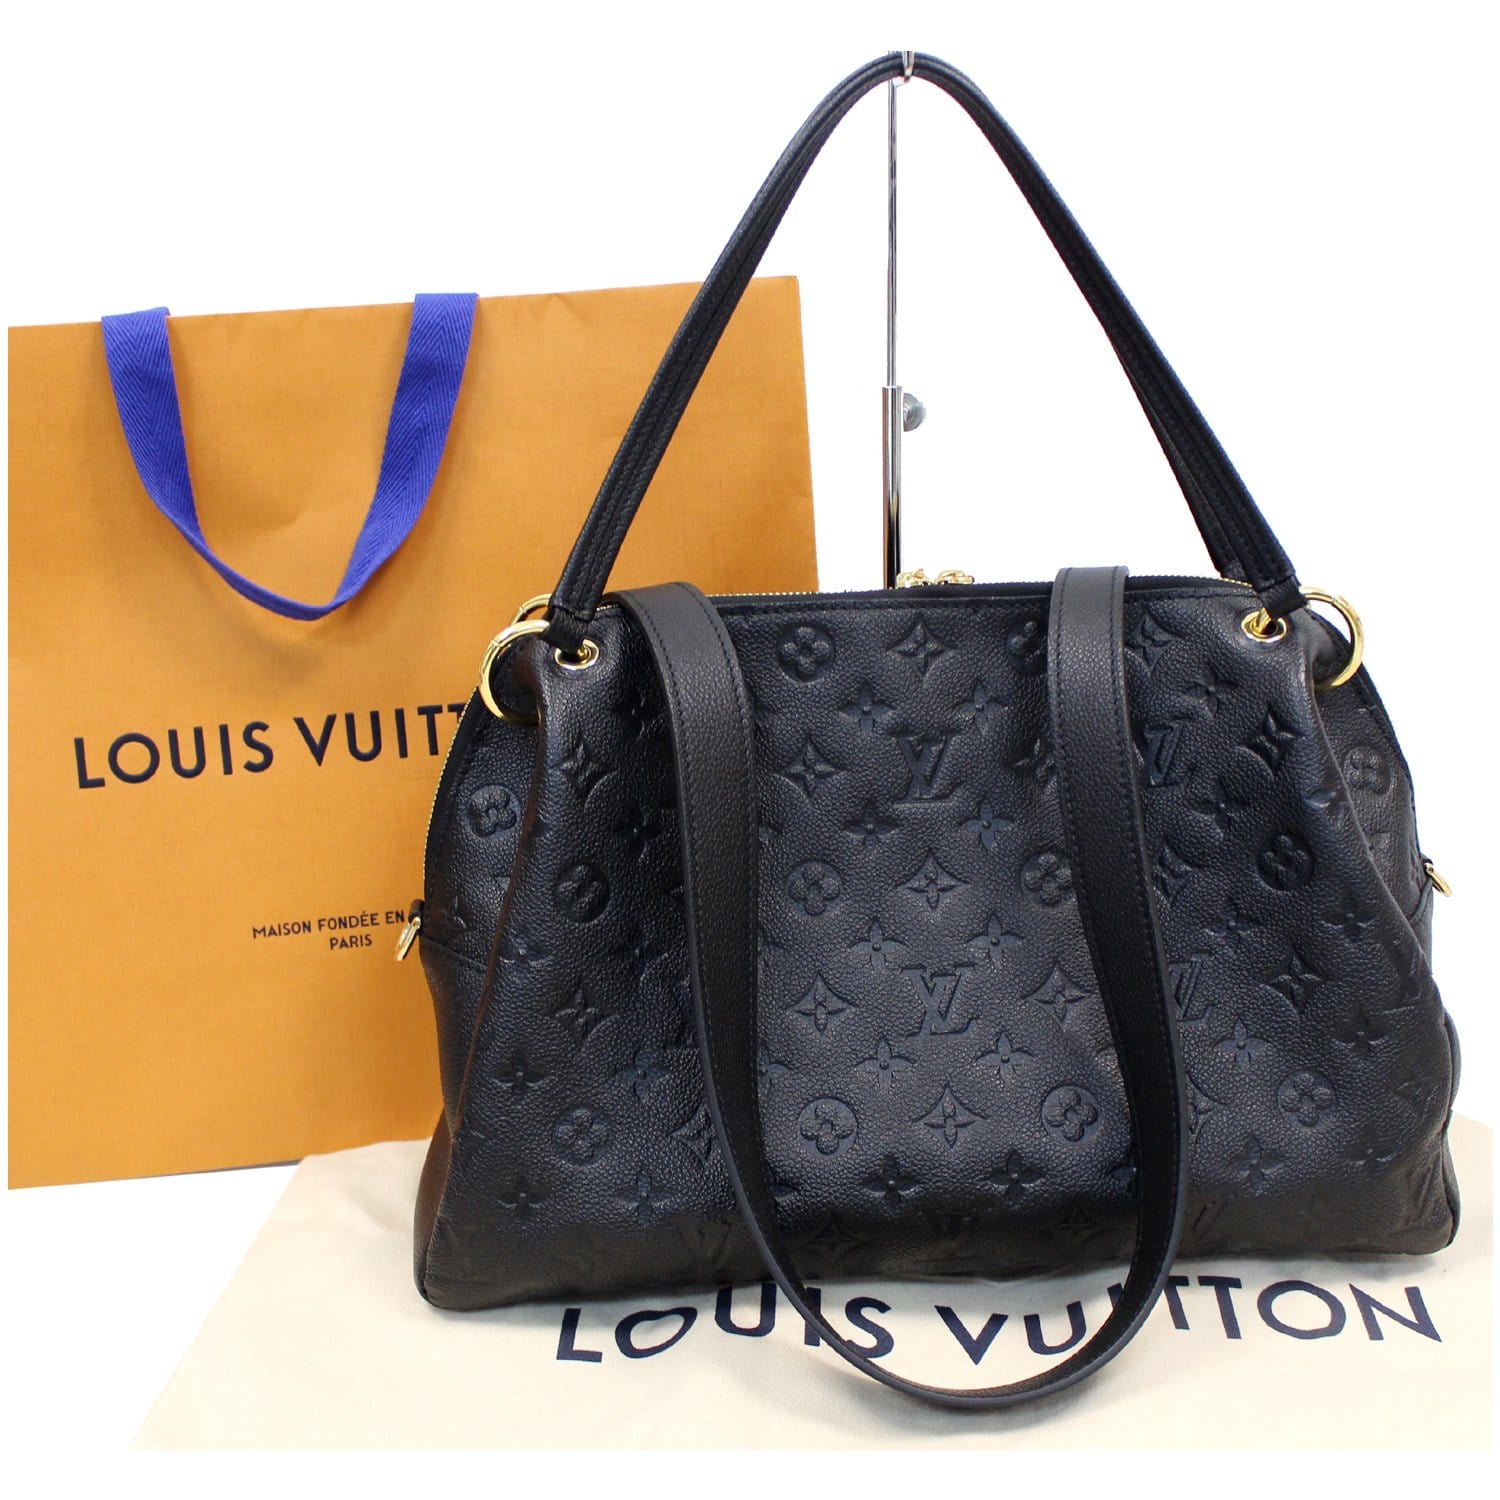 louis vuitton handbags black leather